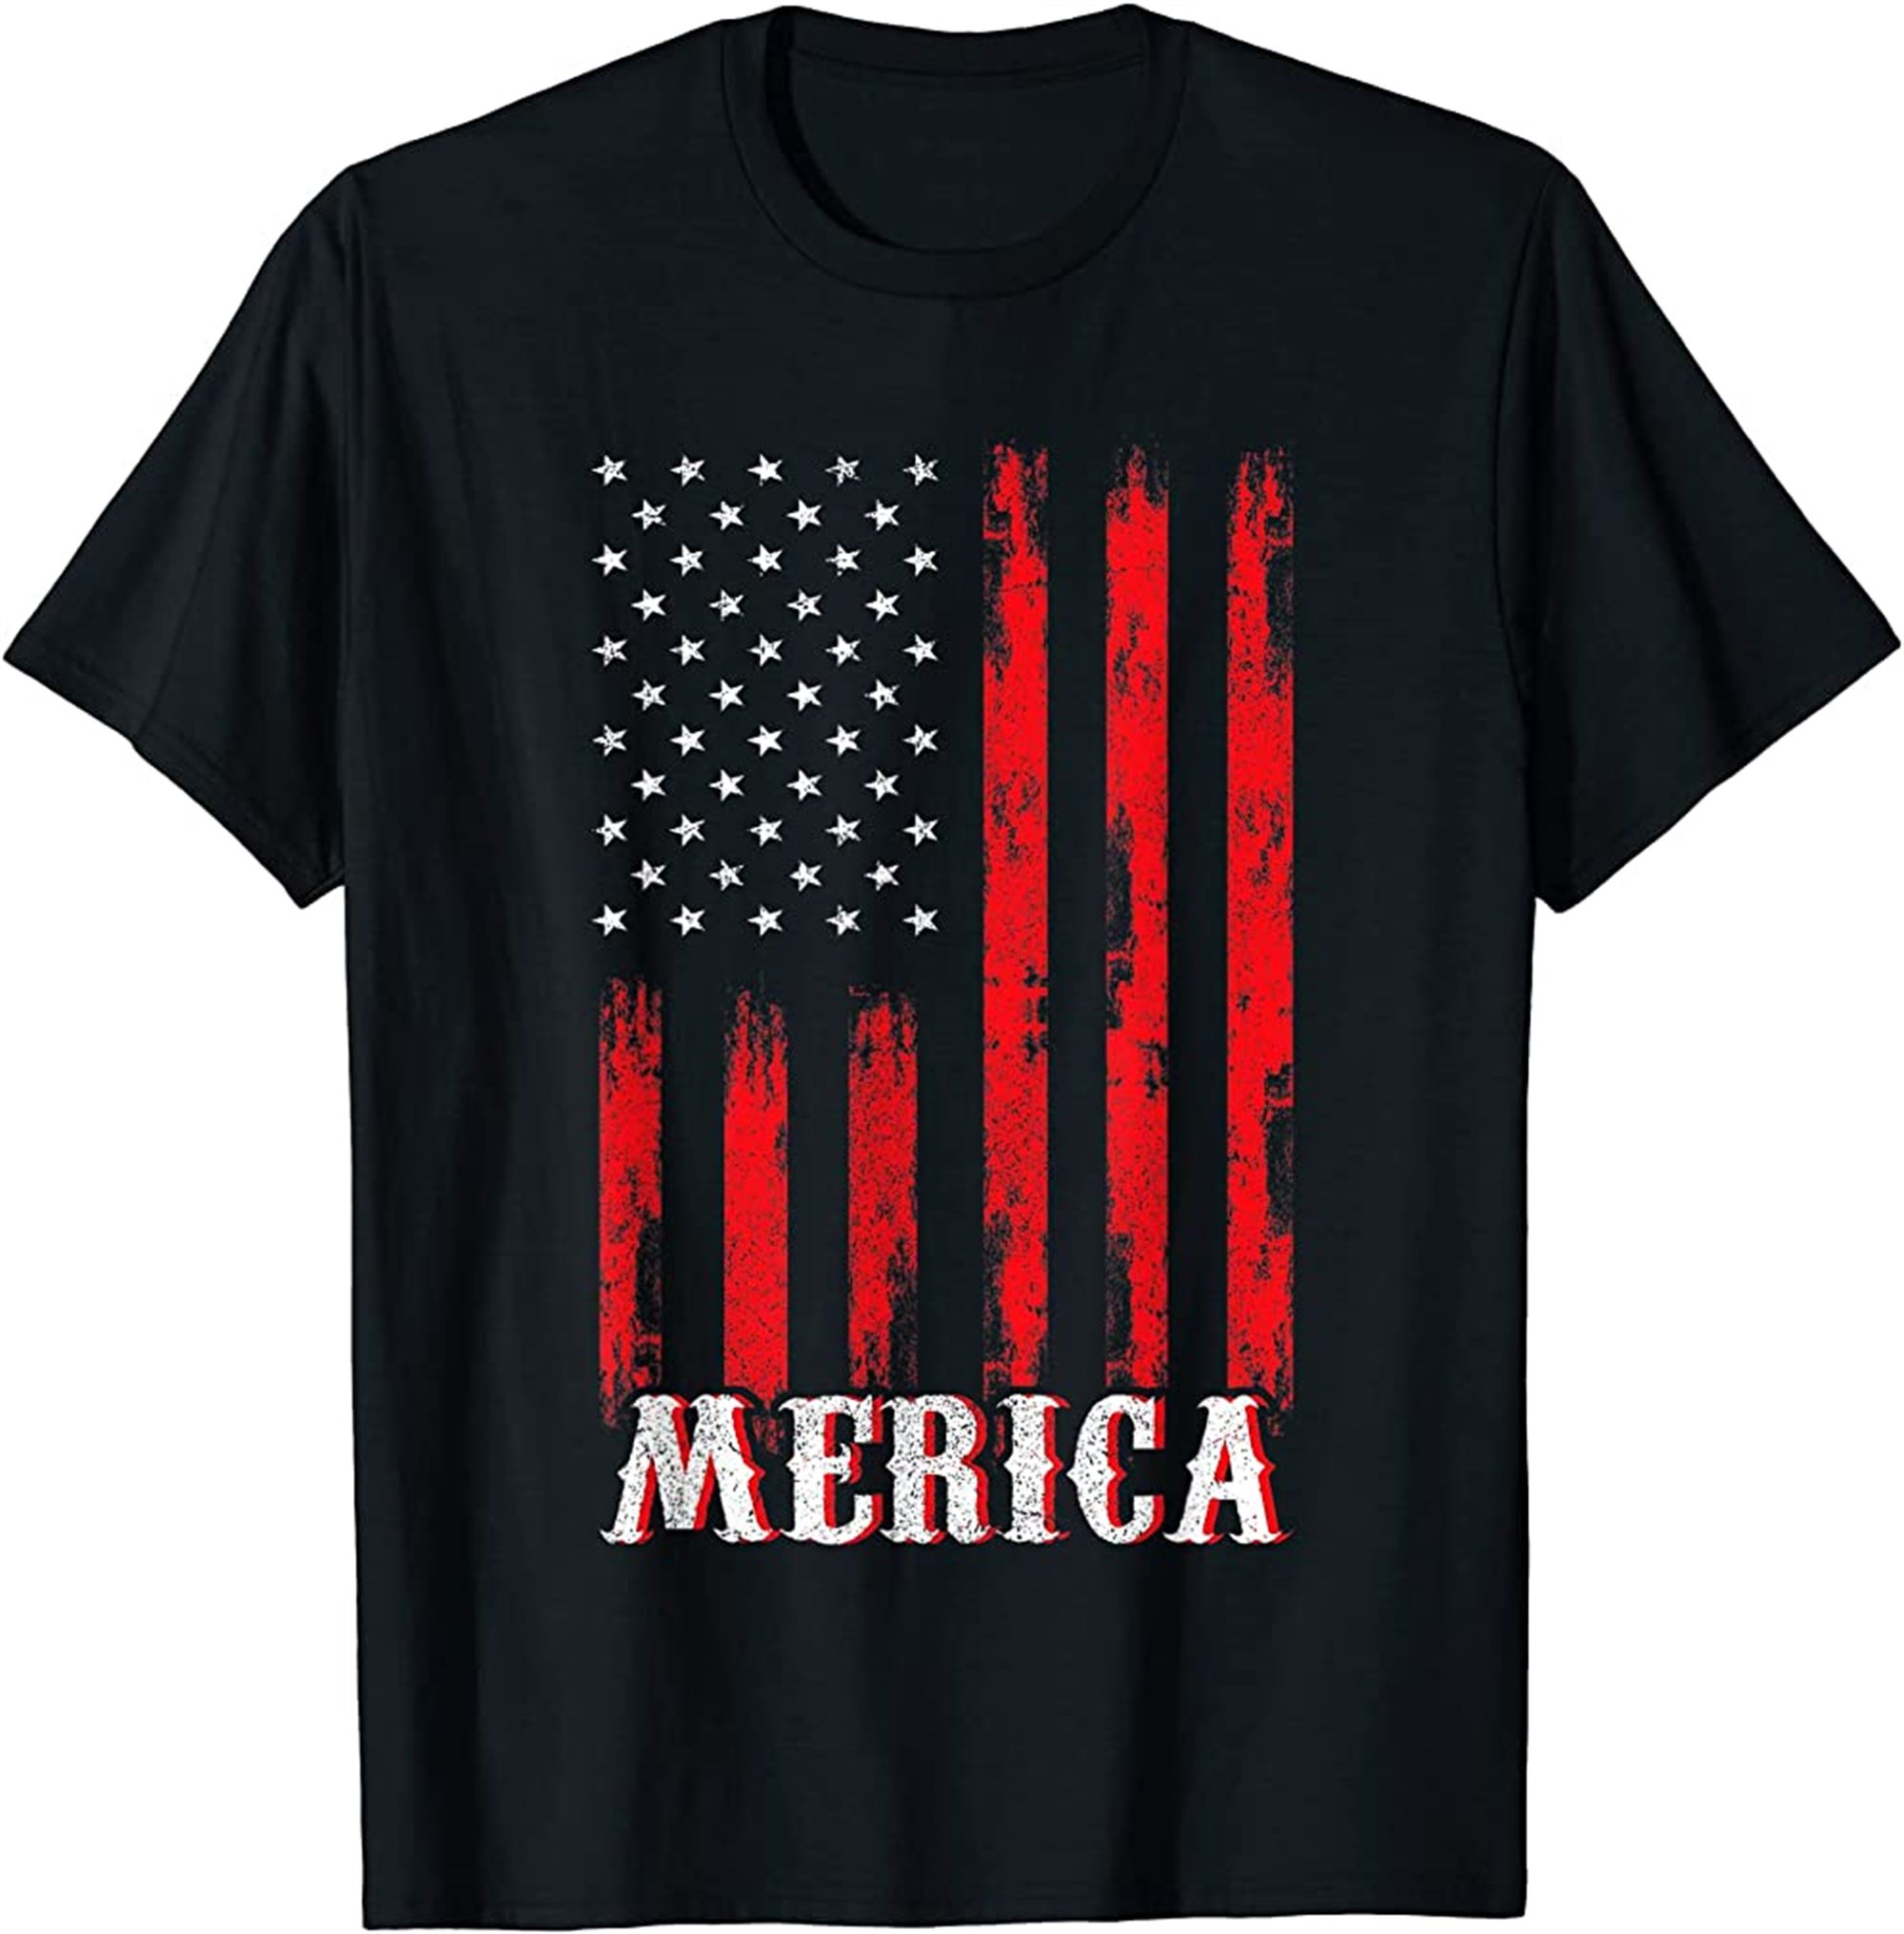 Merica Shirt American Patriot Shirts 4th Of July Usa Flag T-shirt Plus Size Up To 5xl